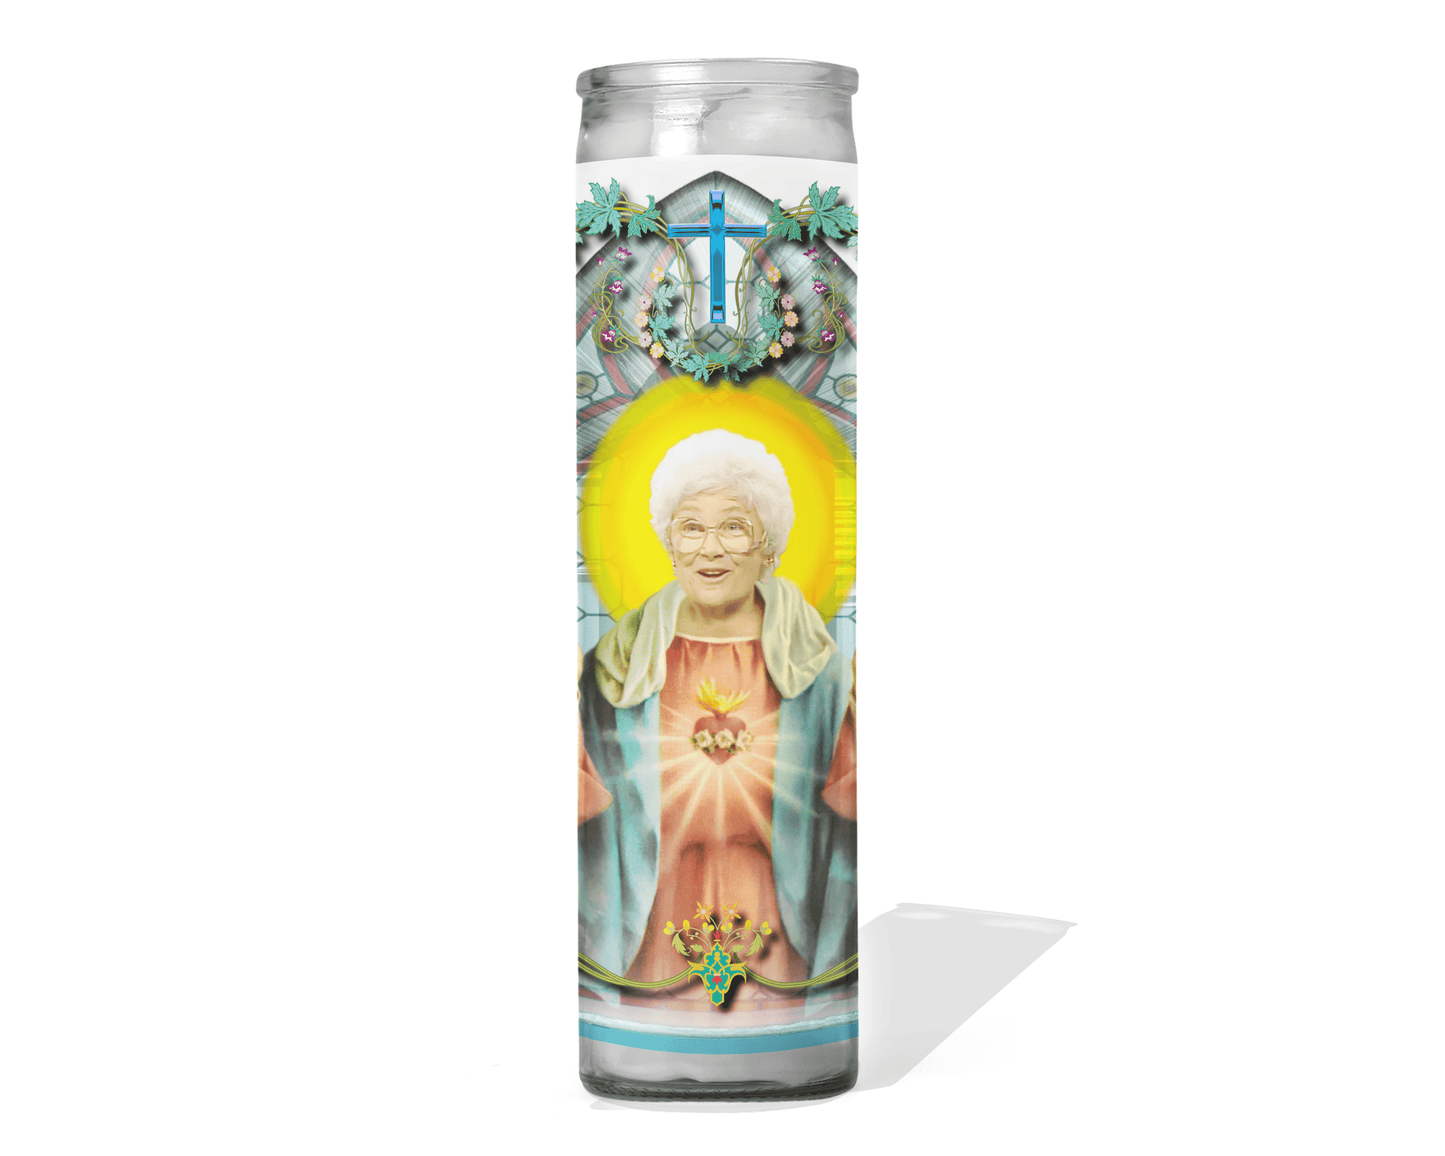 Sophia Petrillo Celebrity Prayer Candle - Golden Girls